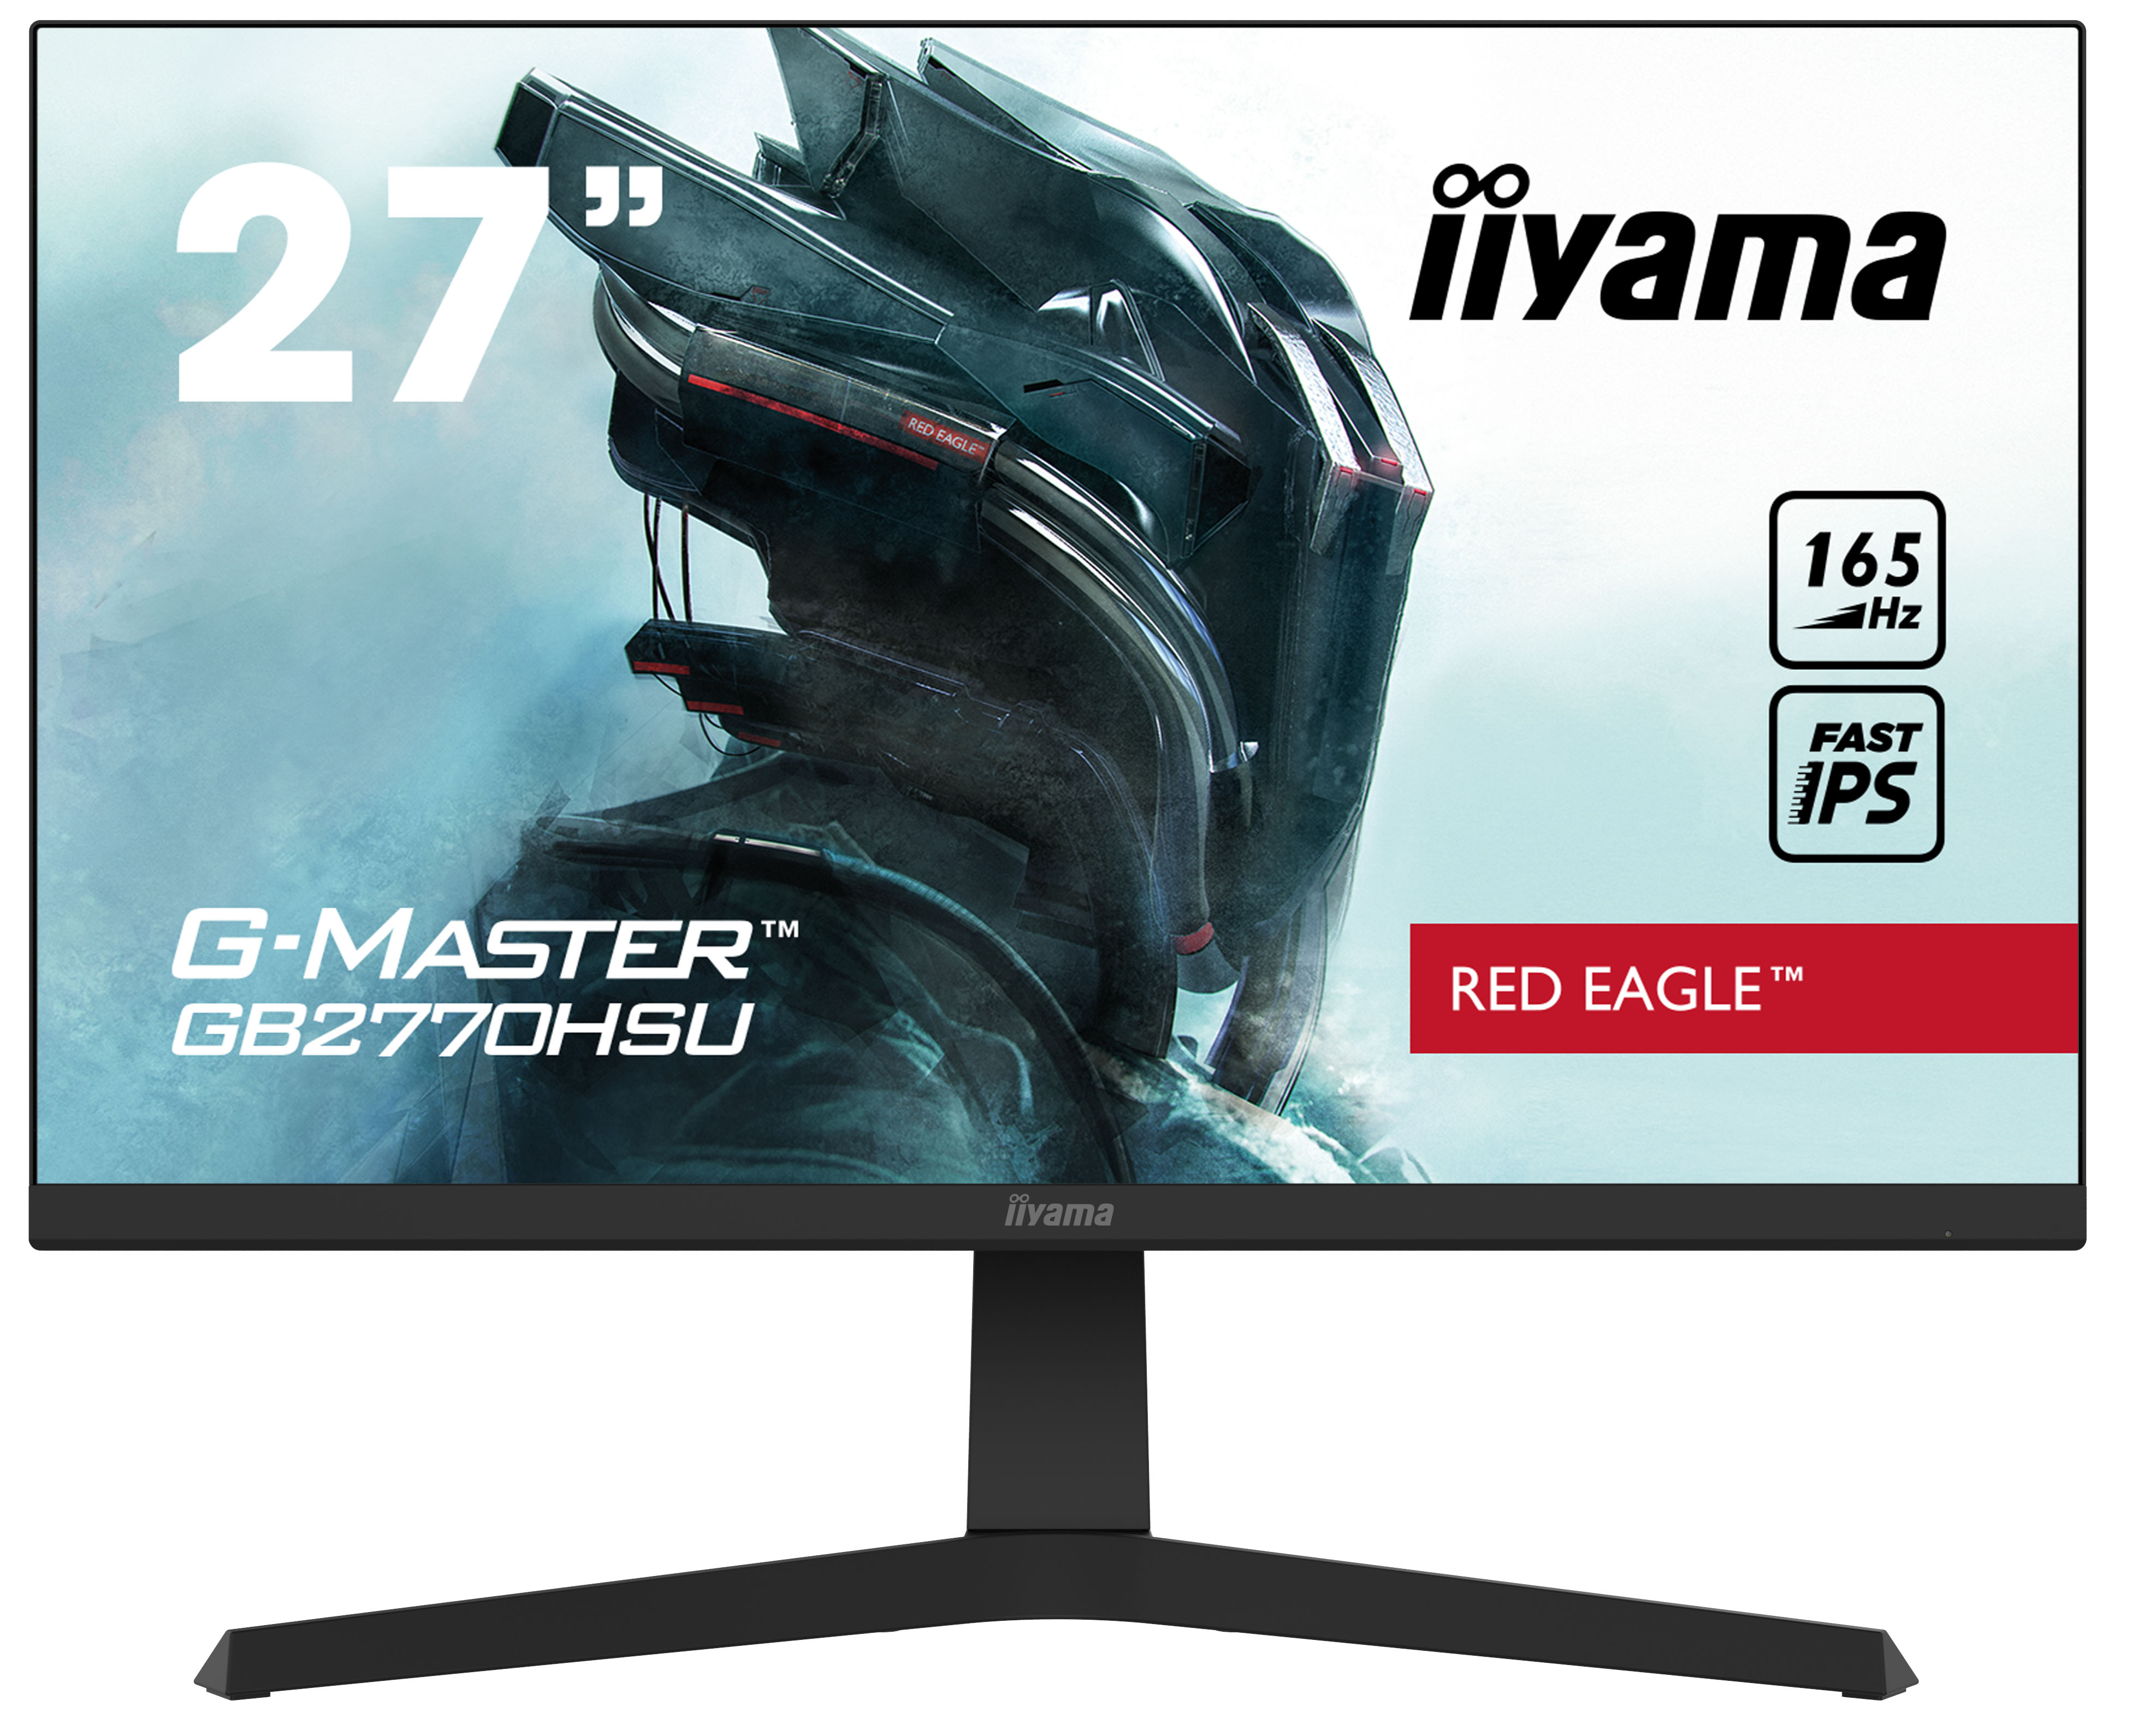 Iiyama G-MASTER GB2770HSU-B1 RED EAGLE | 27" | 165Hz | Gaming Monitor